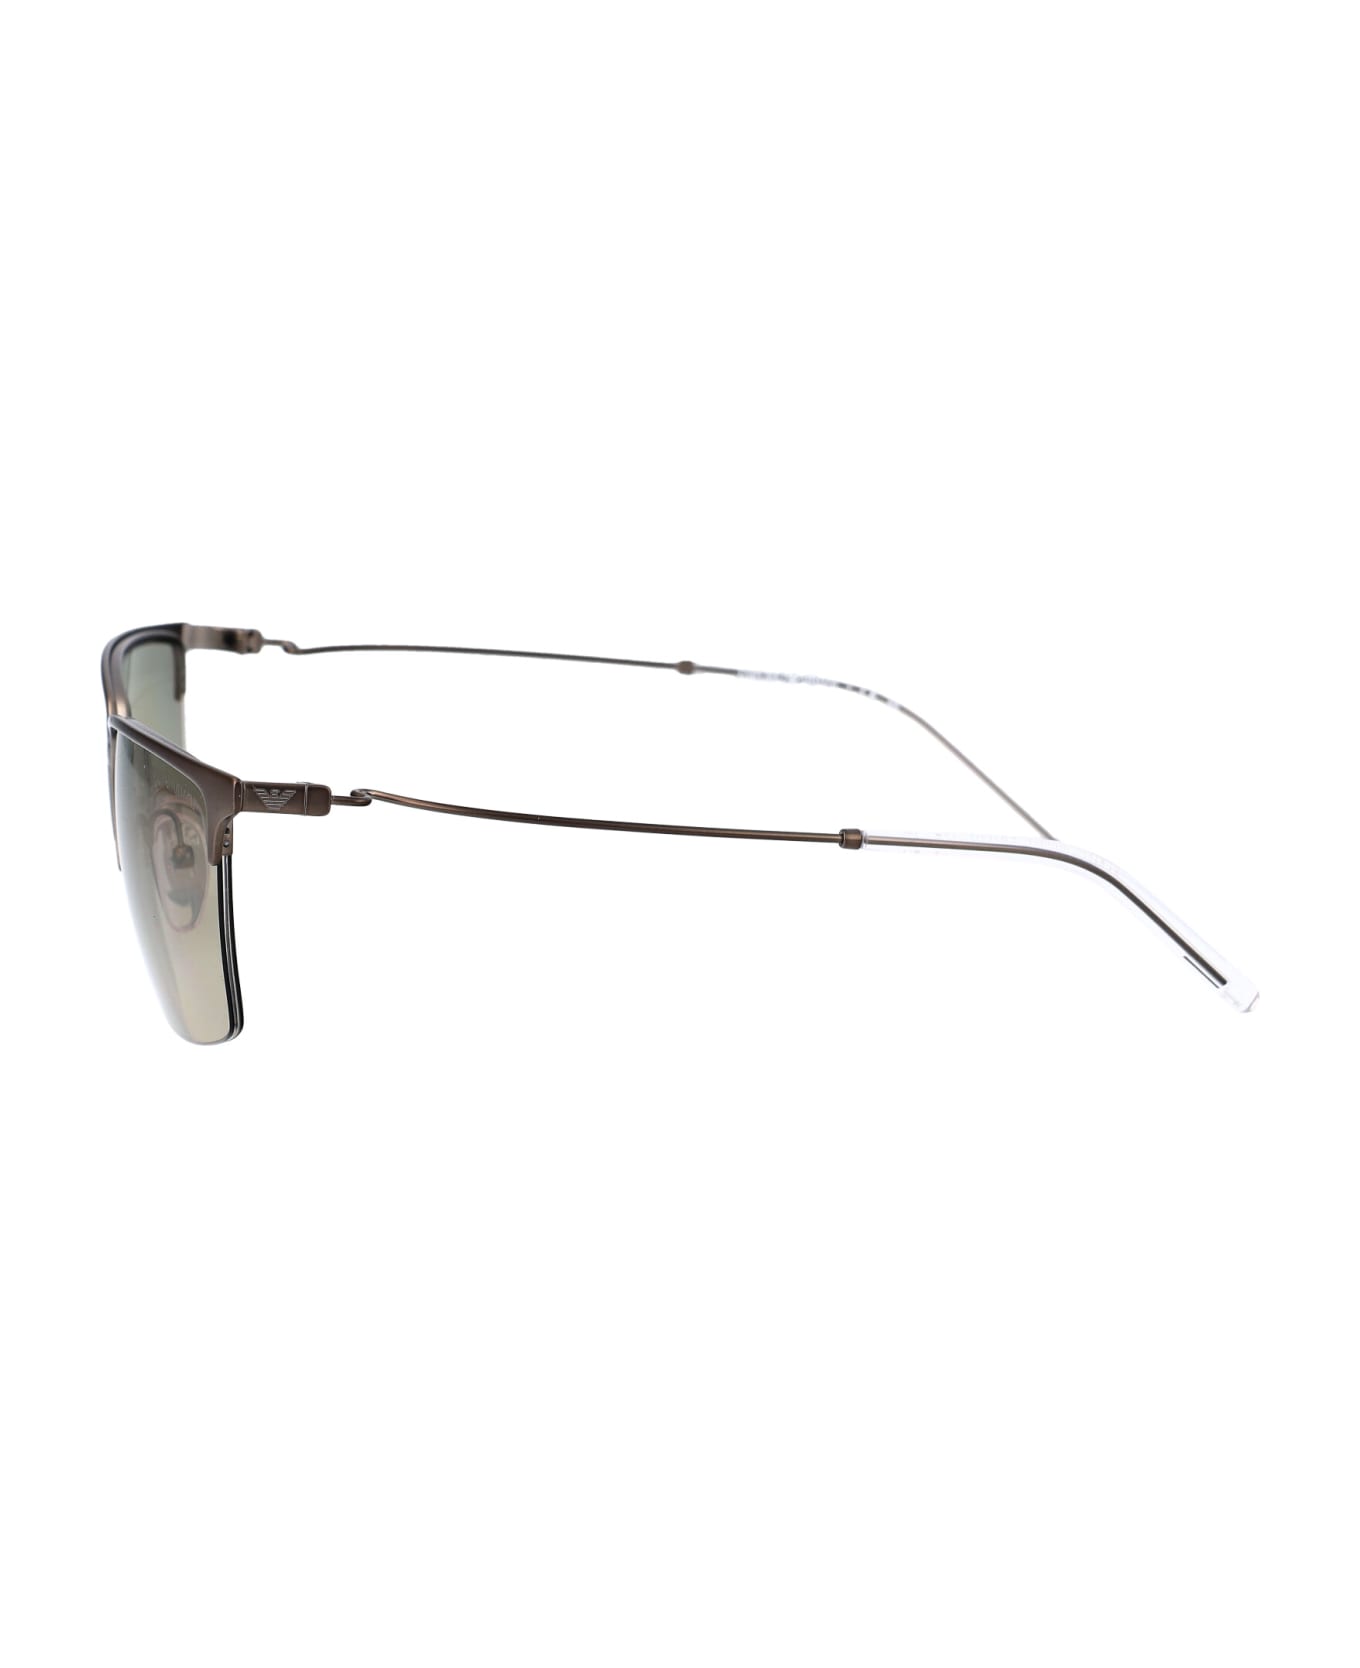 Emporio Armani 0ea2155 Sunglasses - 3003/3 Matte Gunmetal サングラス